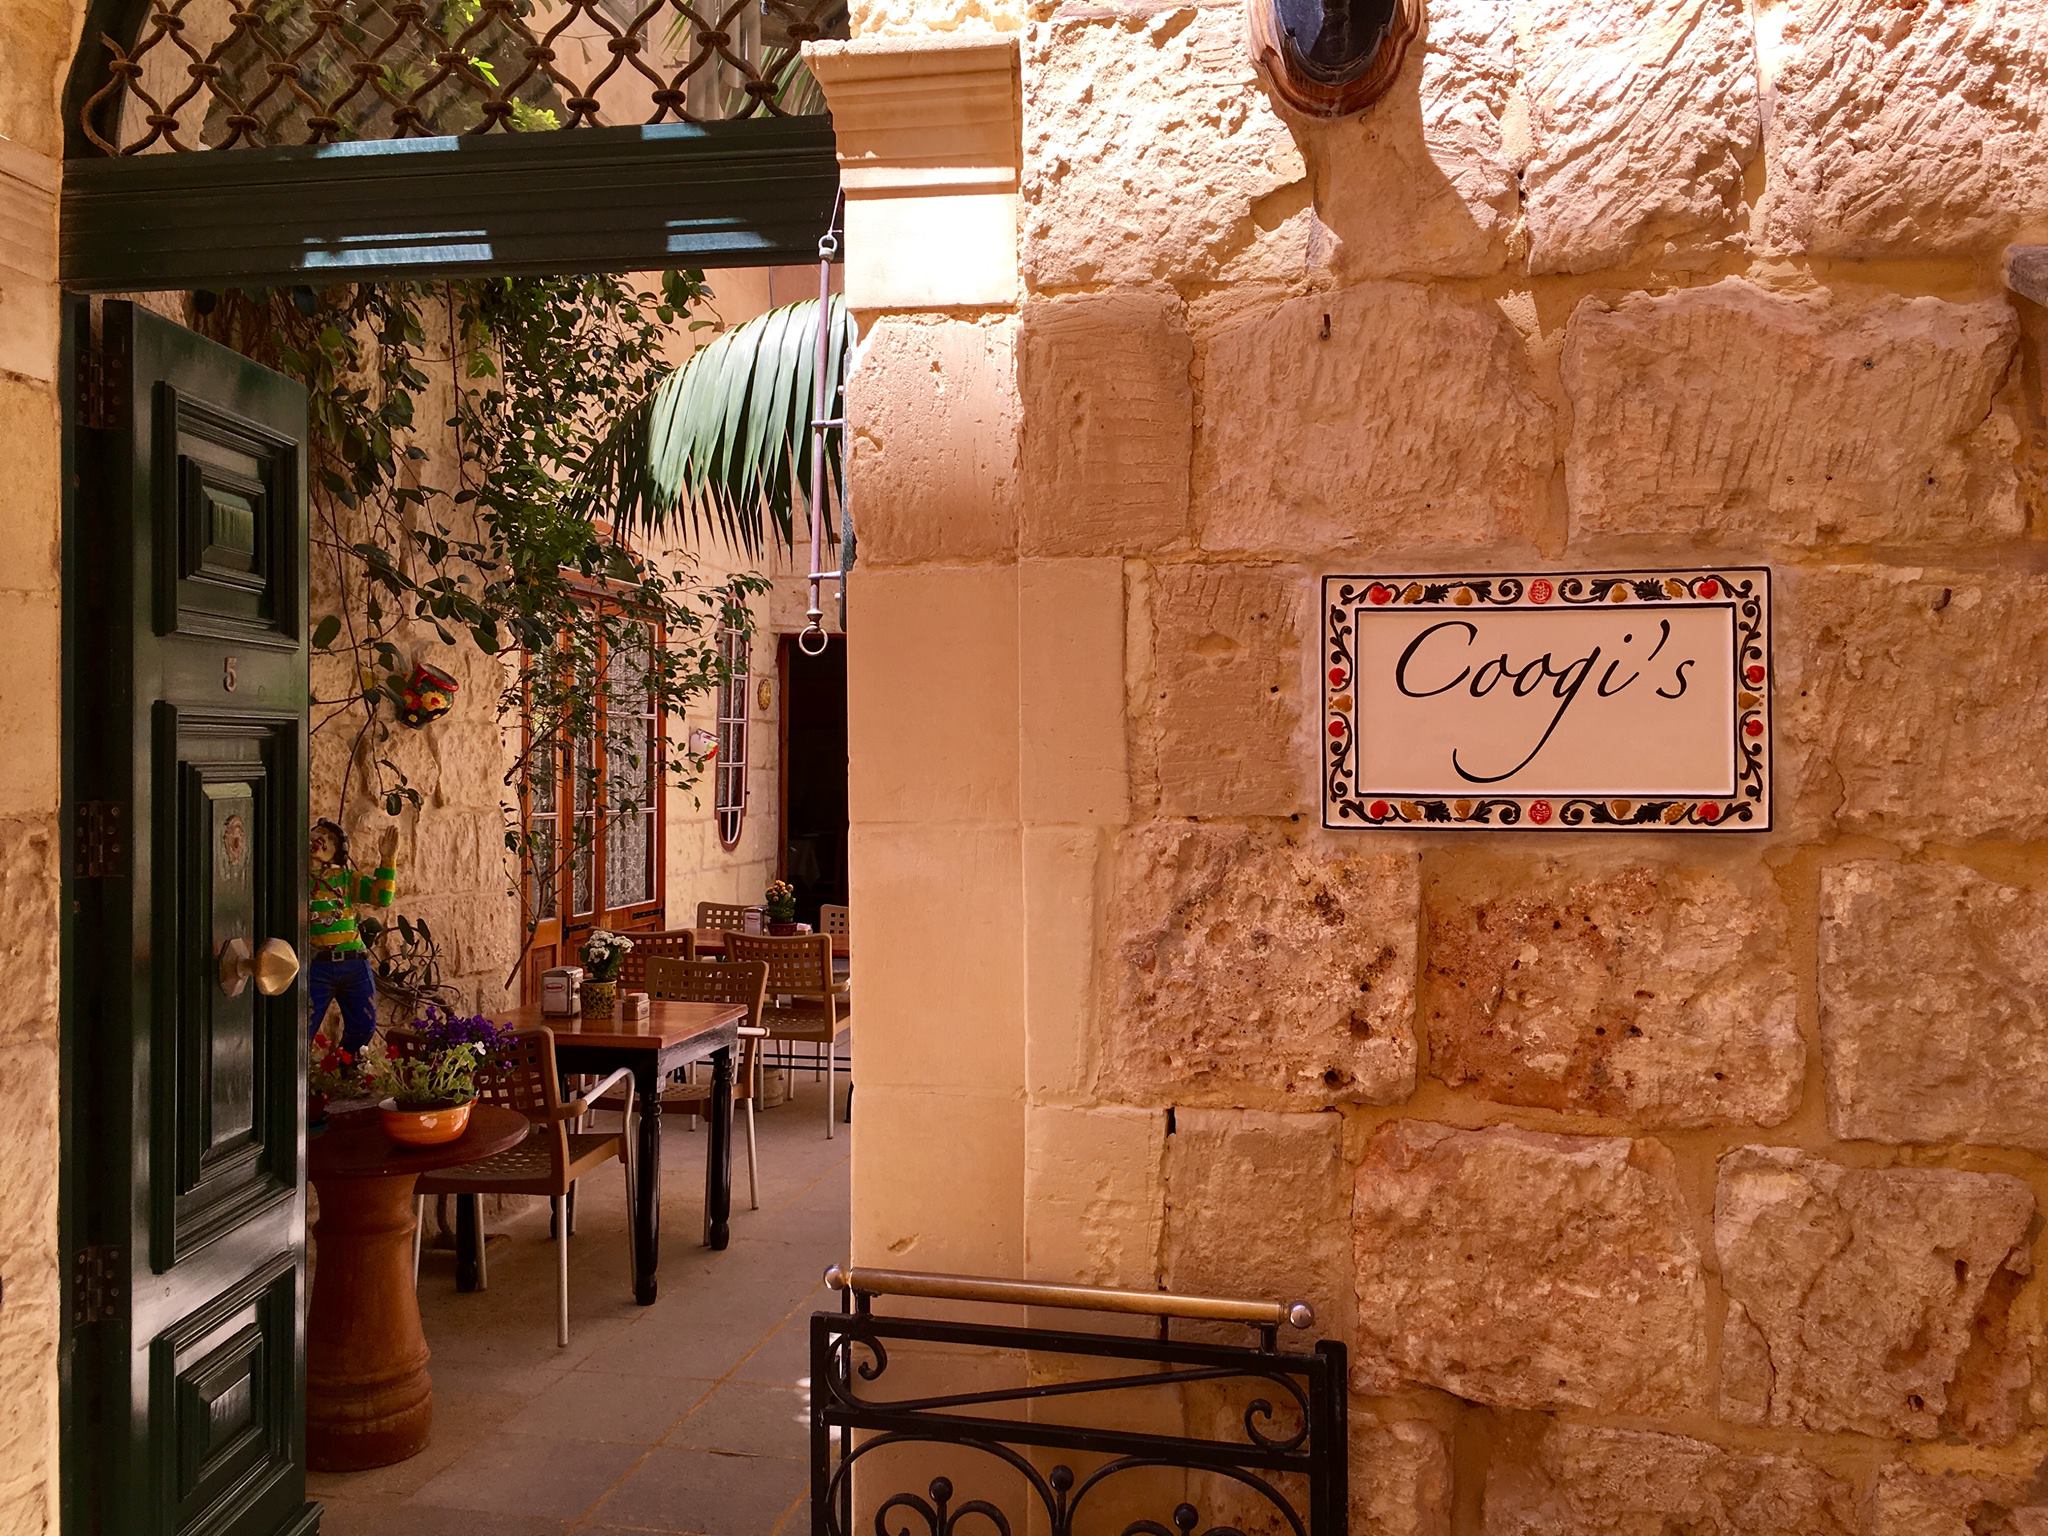 Coogis Restaurant - restaurants in Malta